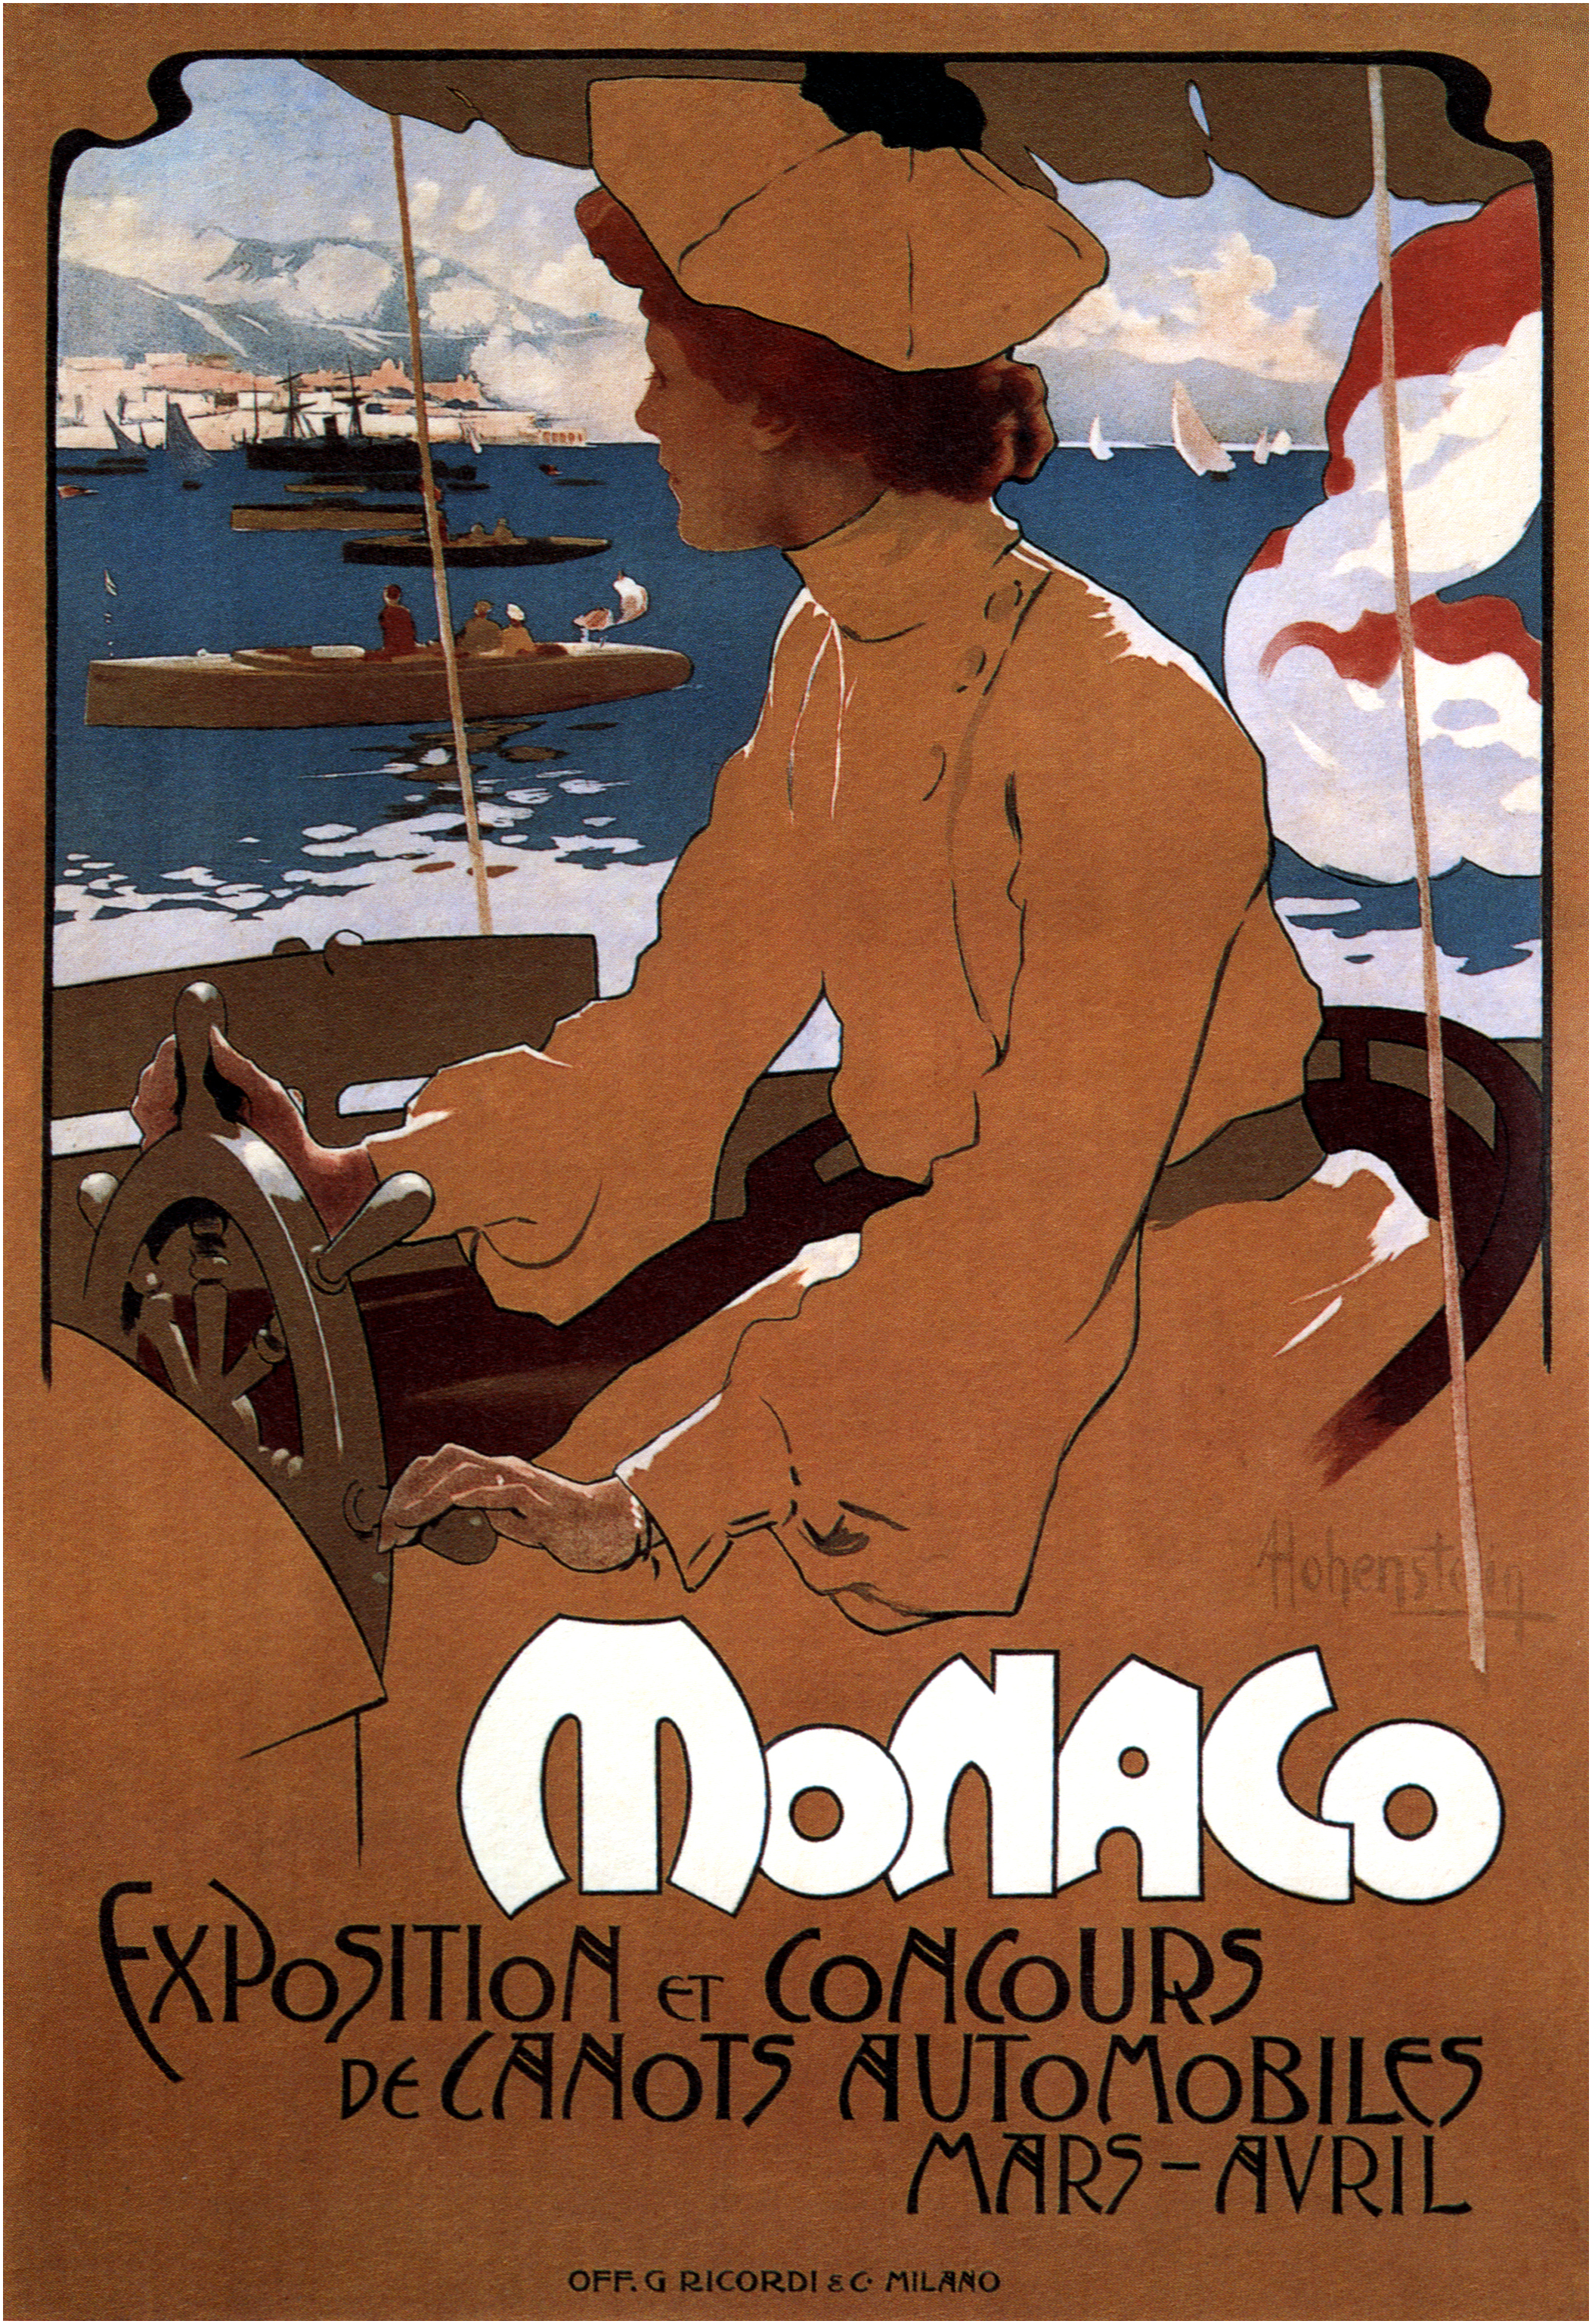 Adolph Hohenstein: Exposition Monaco, 1900